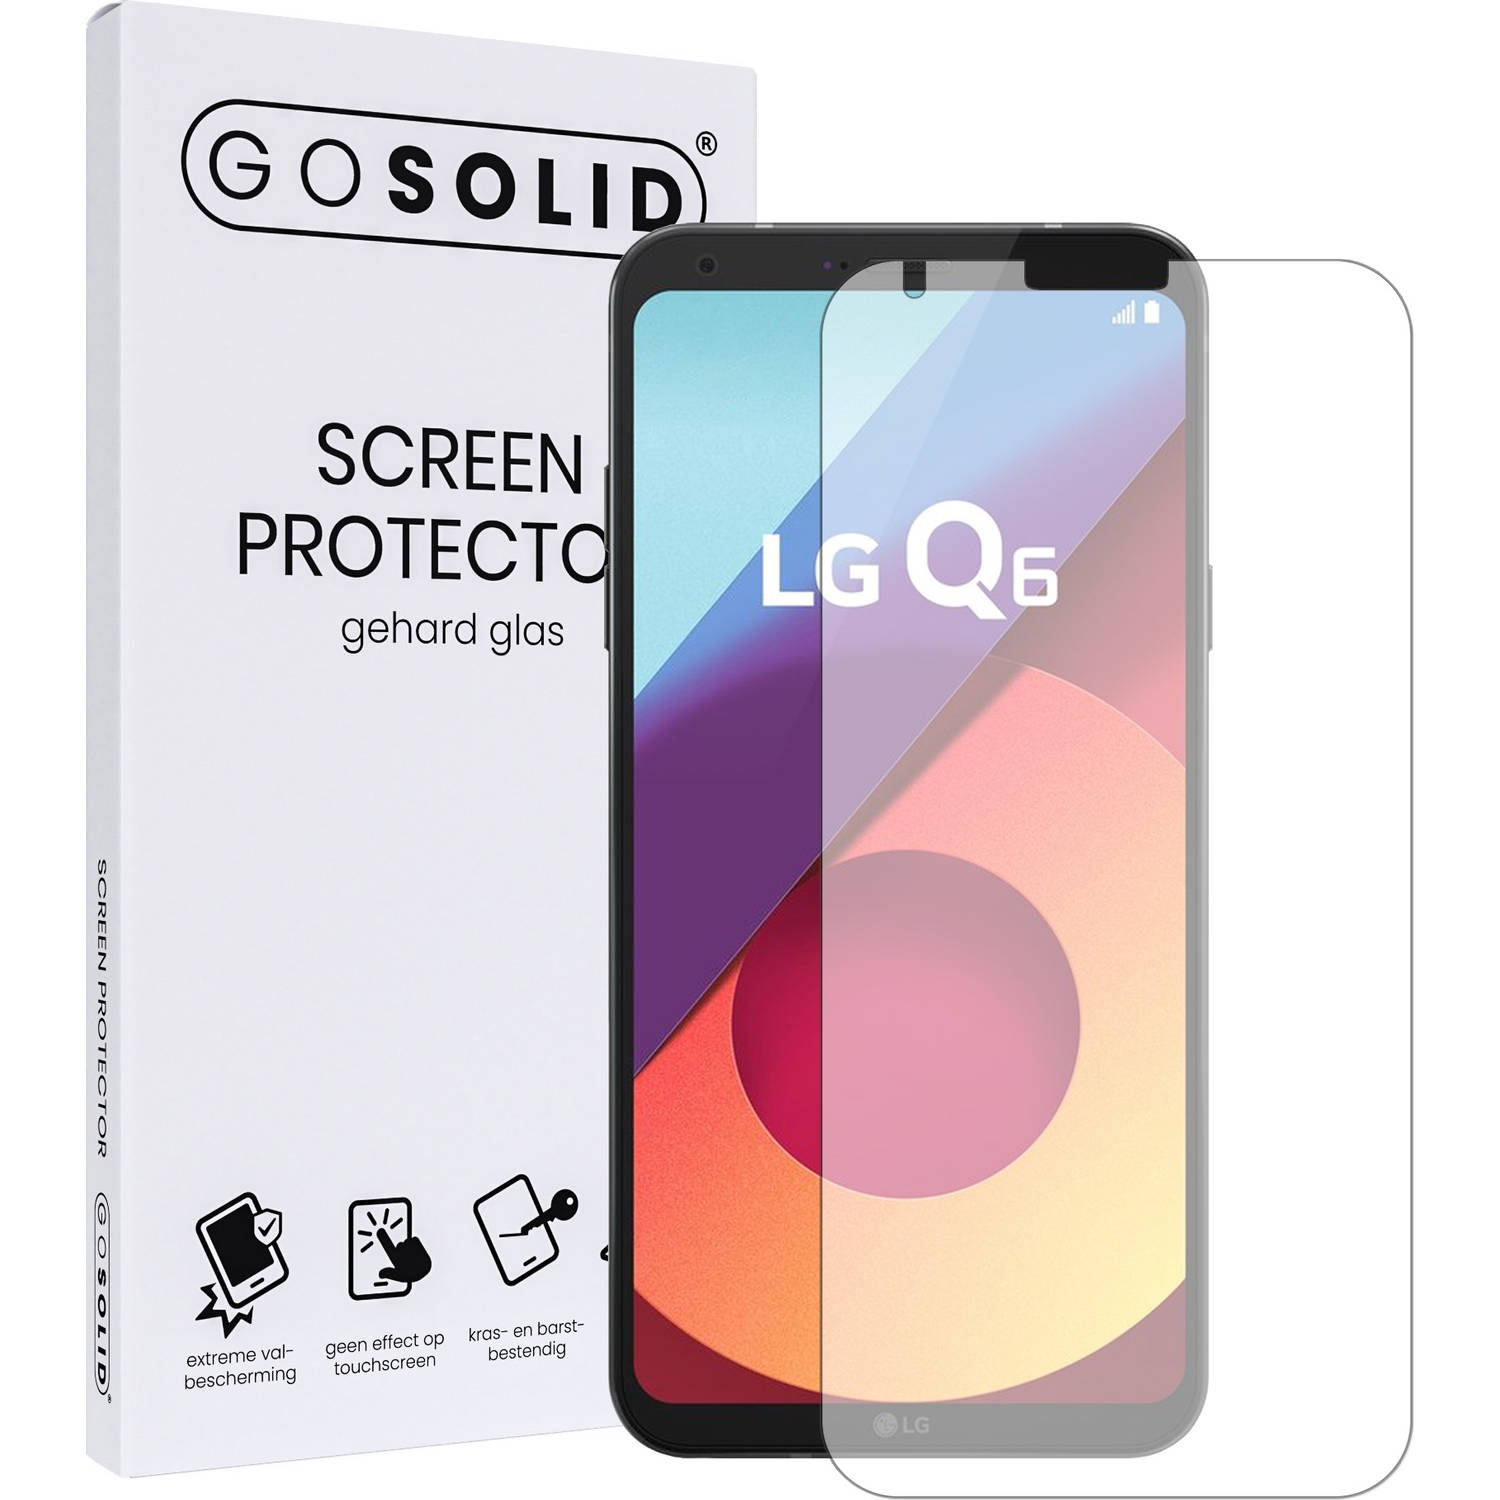 GO SOLID! ® screenprotector LG Q6 - gehard glas